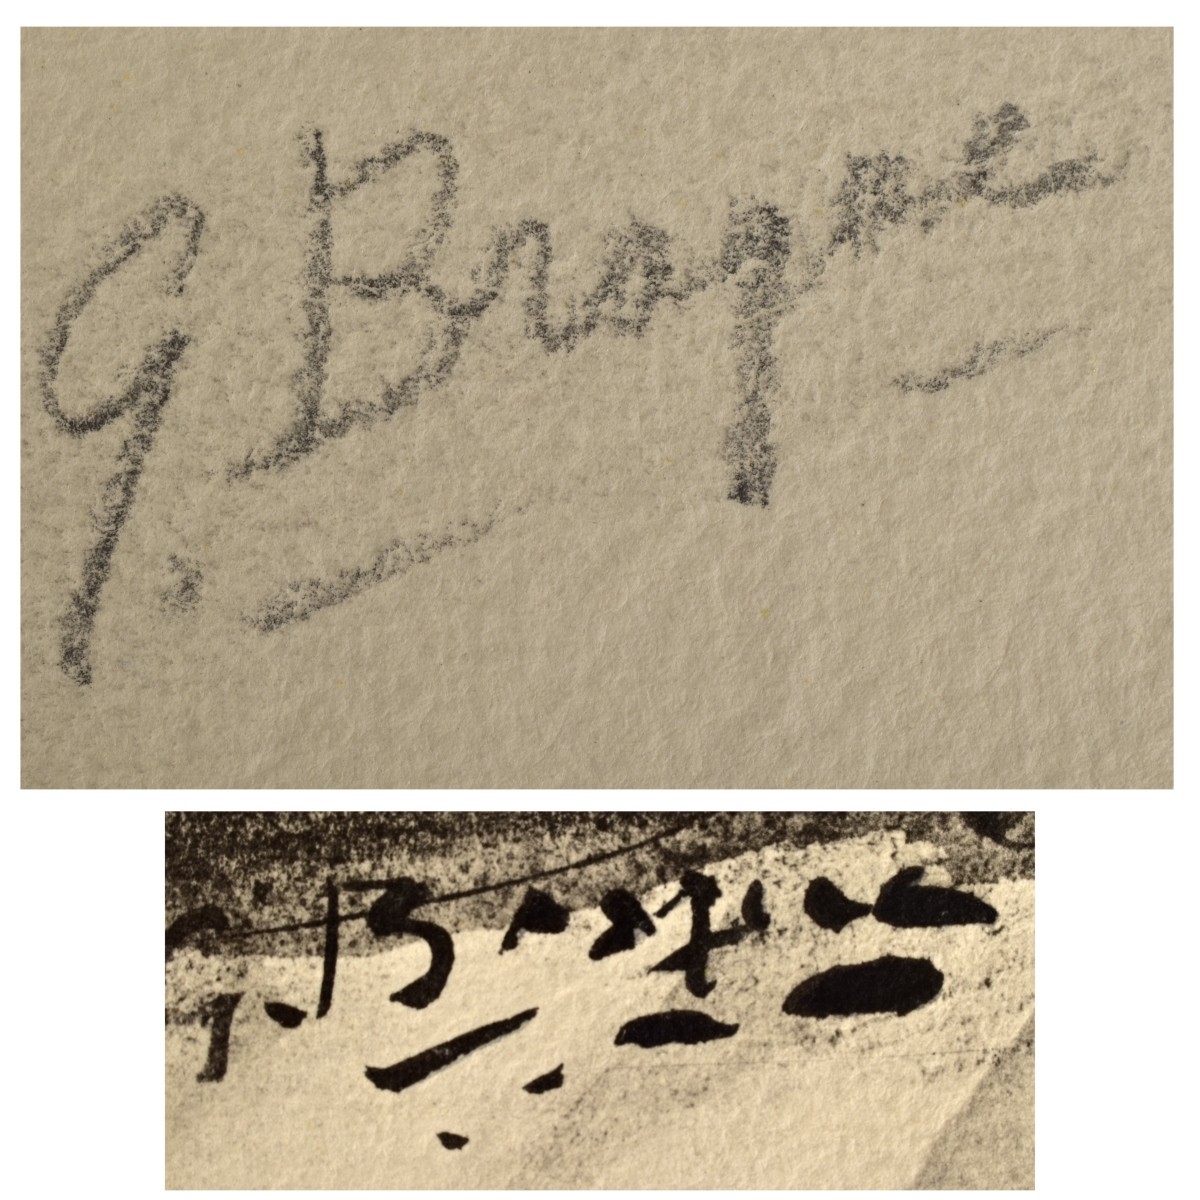 Attrib: Georges Braque (1882 - 1963)